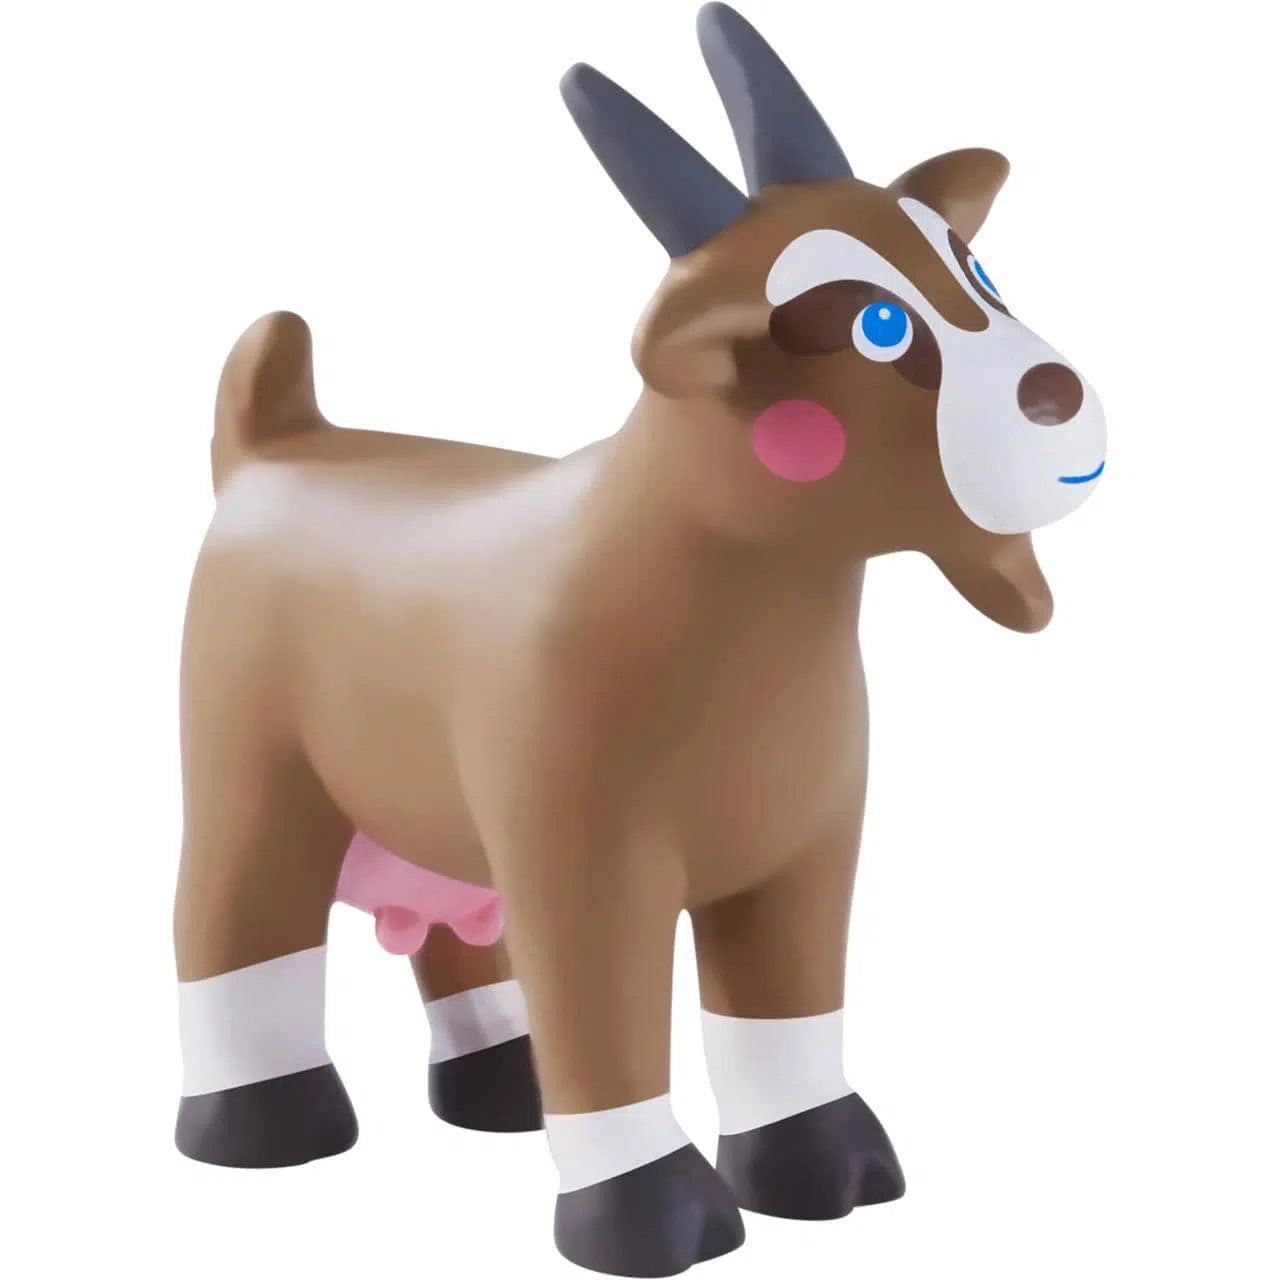 Haba-Little Friends Goat-12998-Legacy Toys